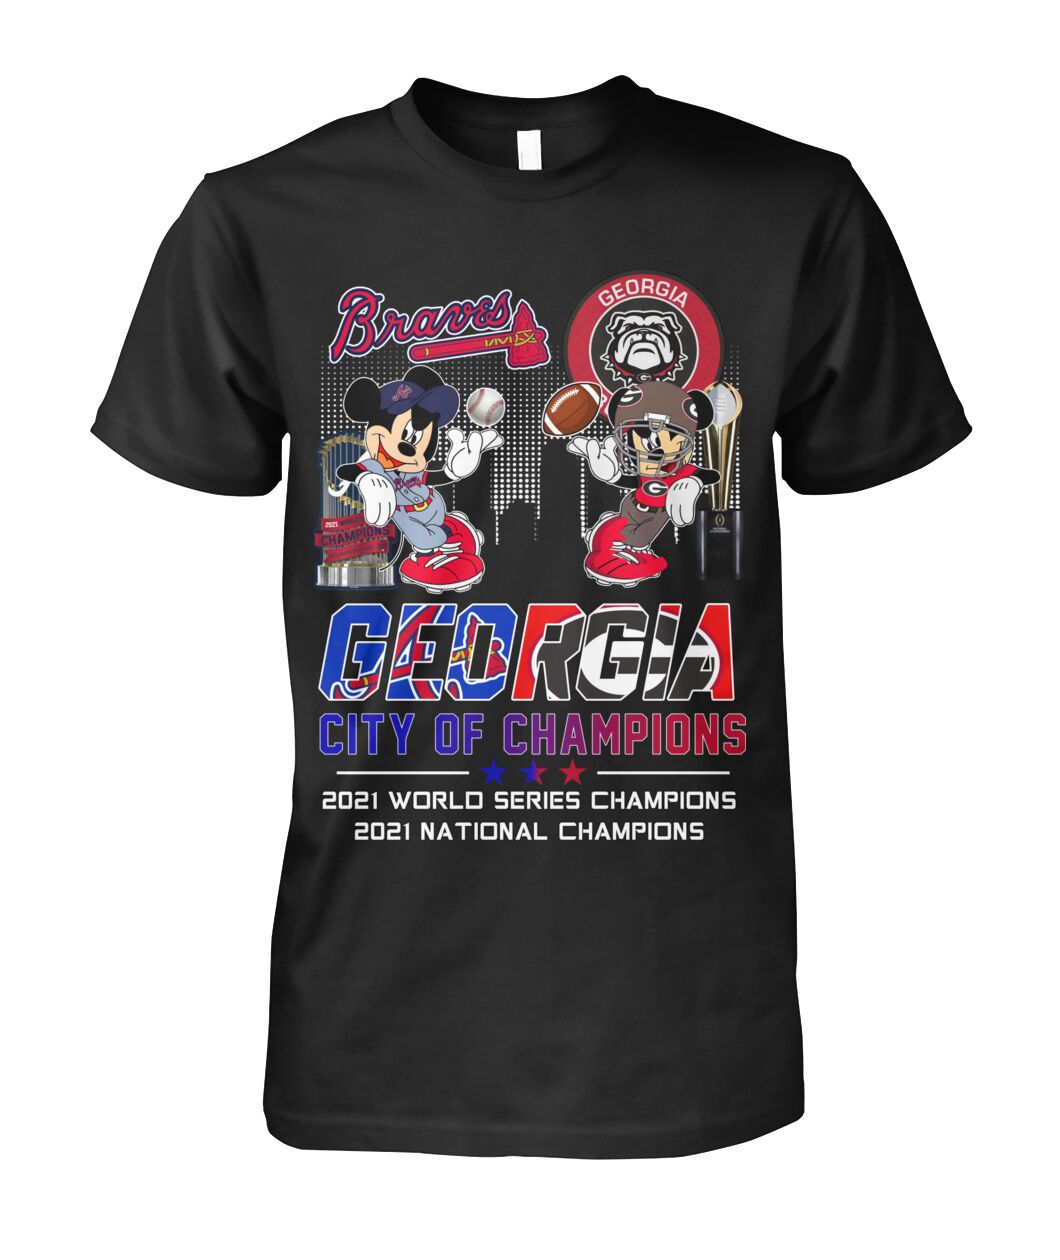 Mickey Mouse Georgia Bulldogs City of Champions shirt hoodie 1